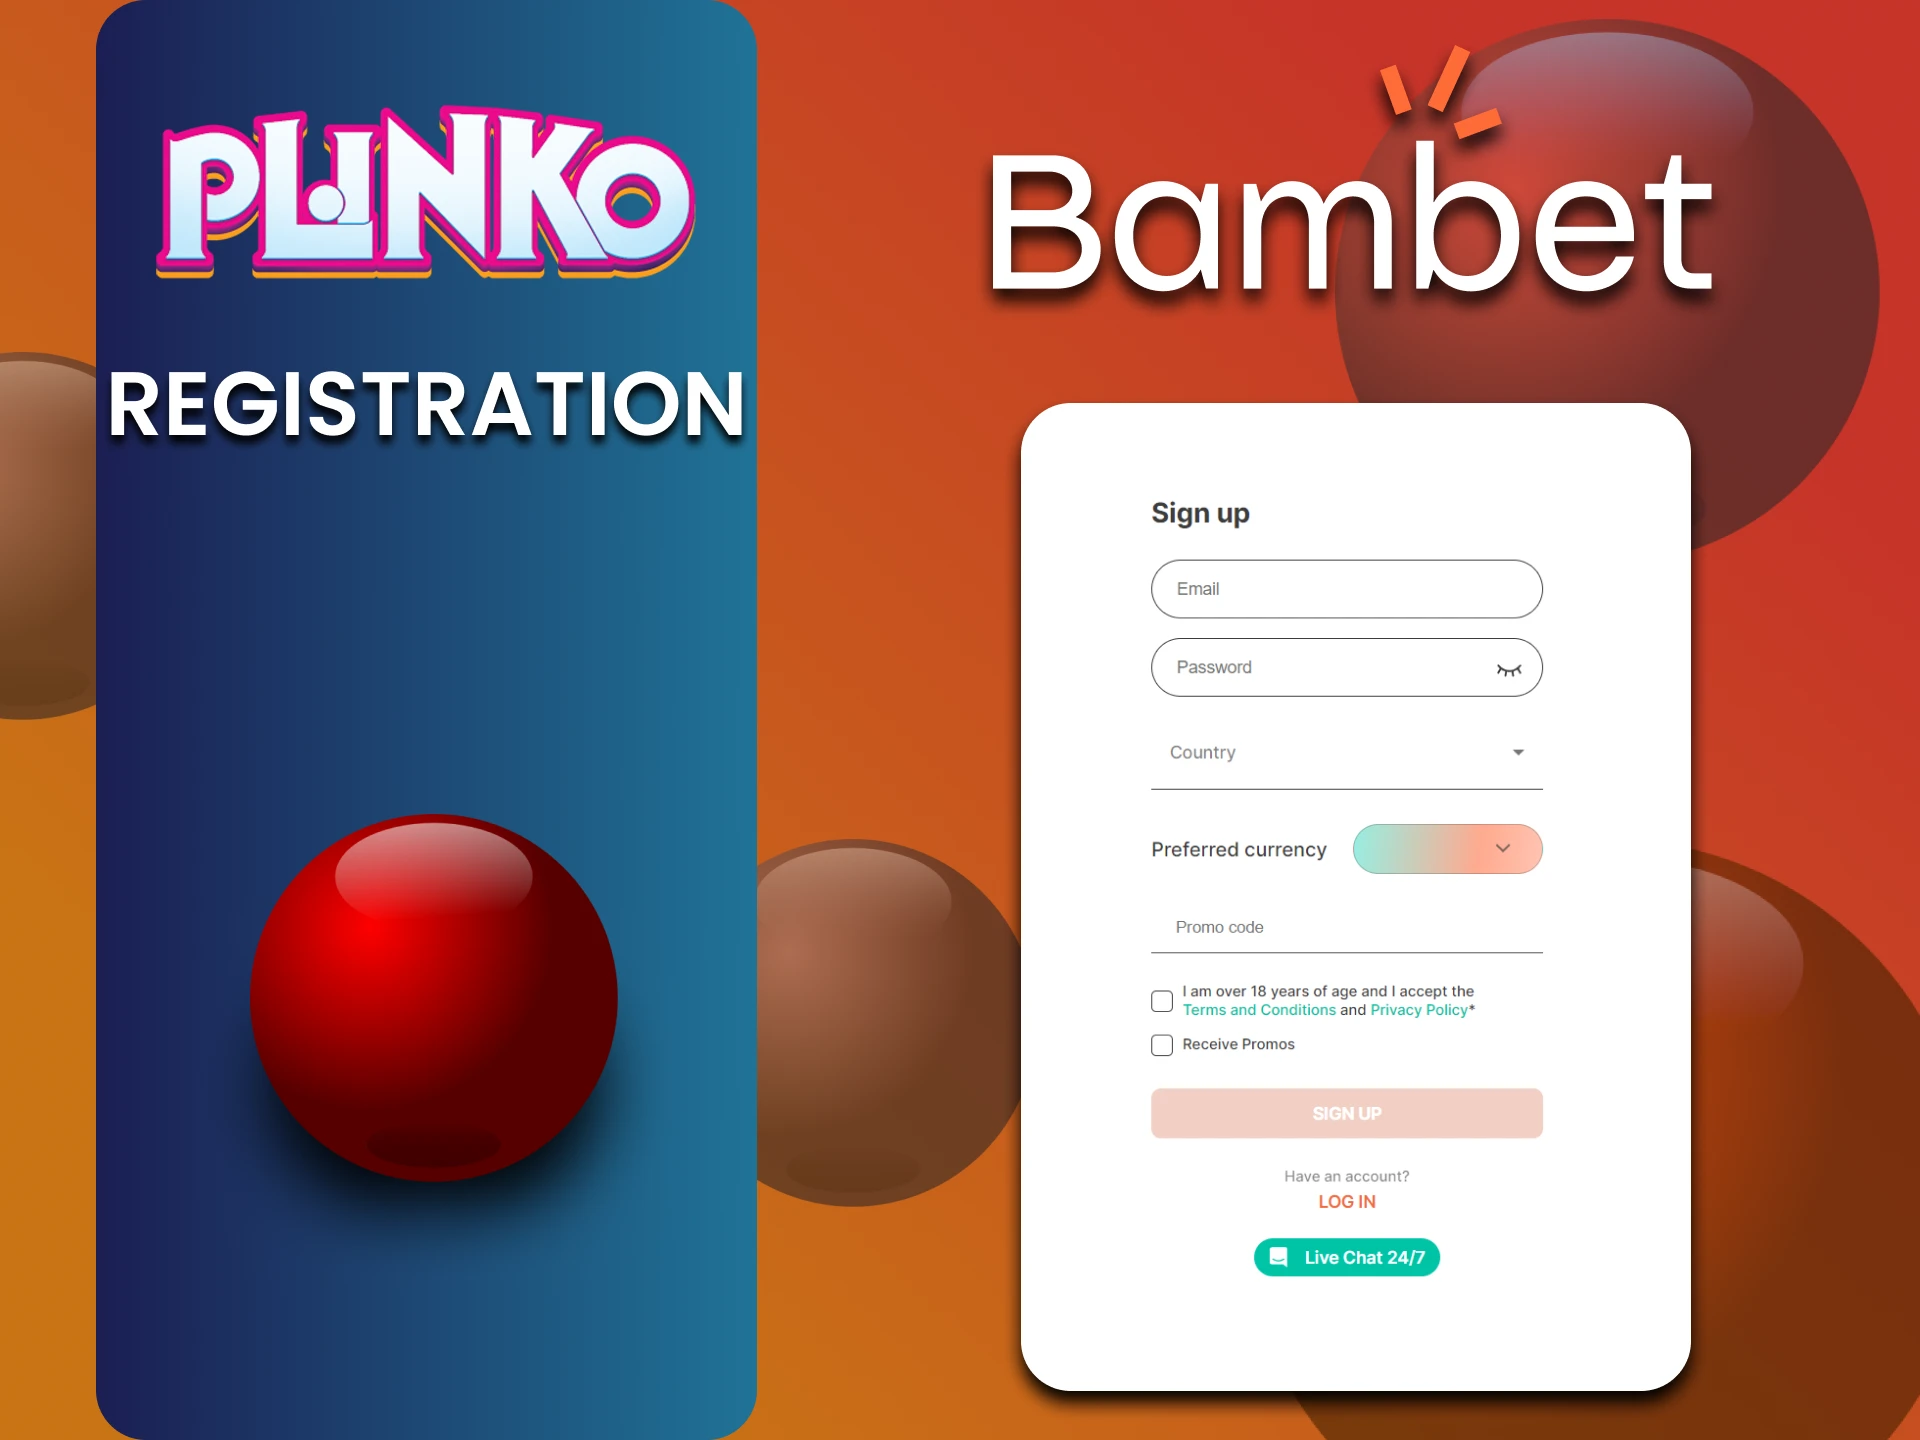 Create a Bambet account to play Plinko.